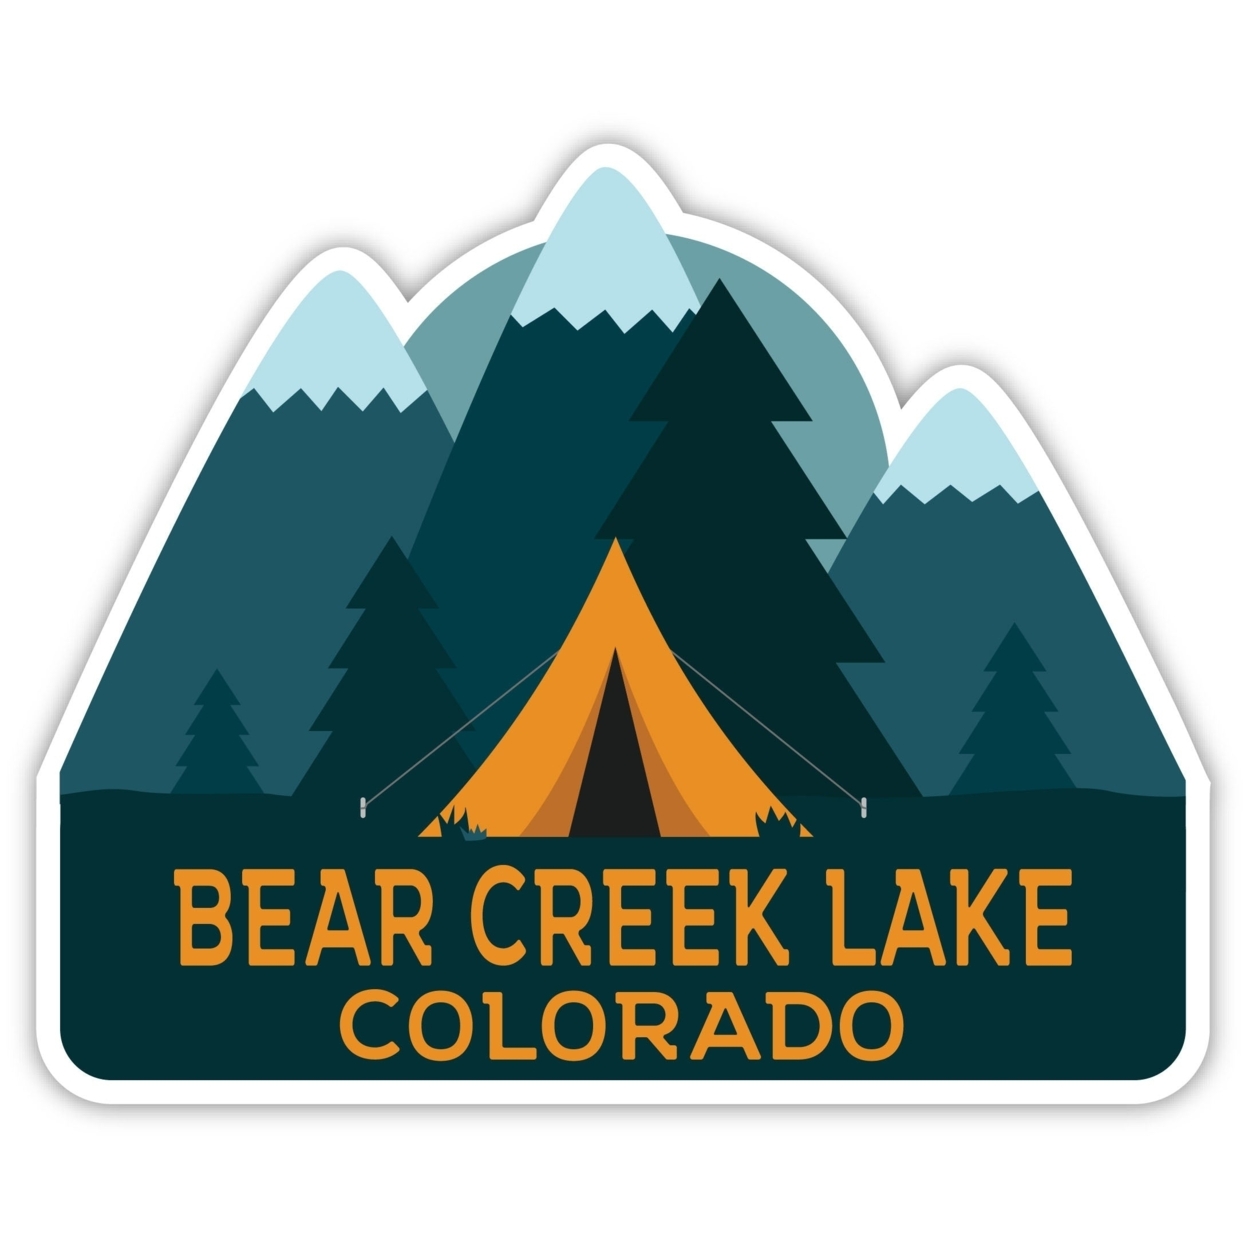 Bear Creek Lake Colorado Souvenir Decorative Stickers (Choose Theme And Size) - 4-Pack, 2-Inch, Tent